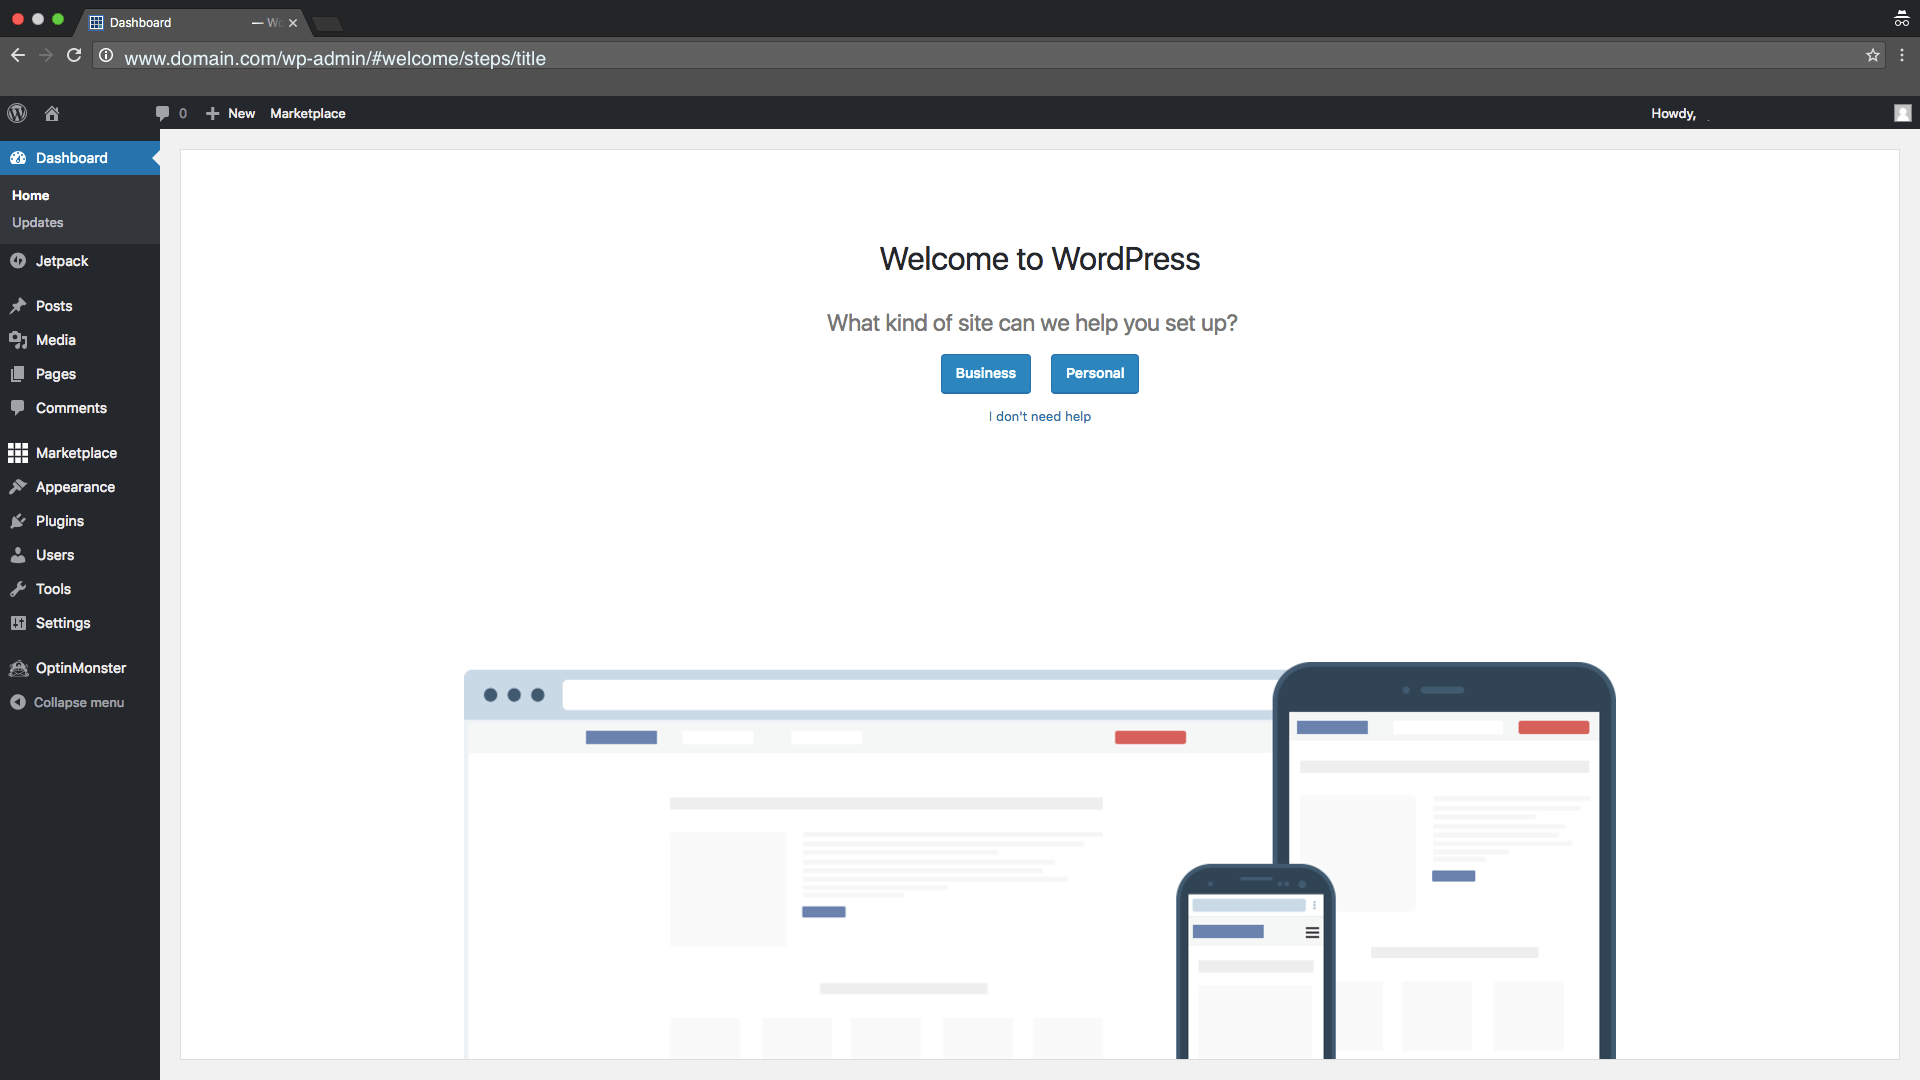 The WordPress dashboard